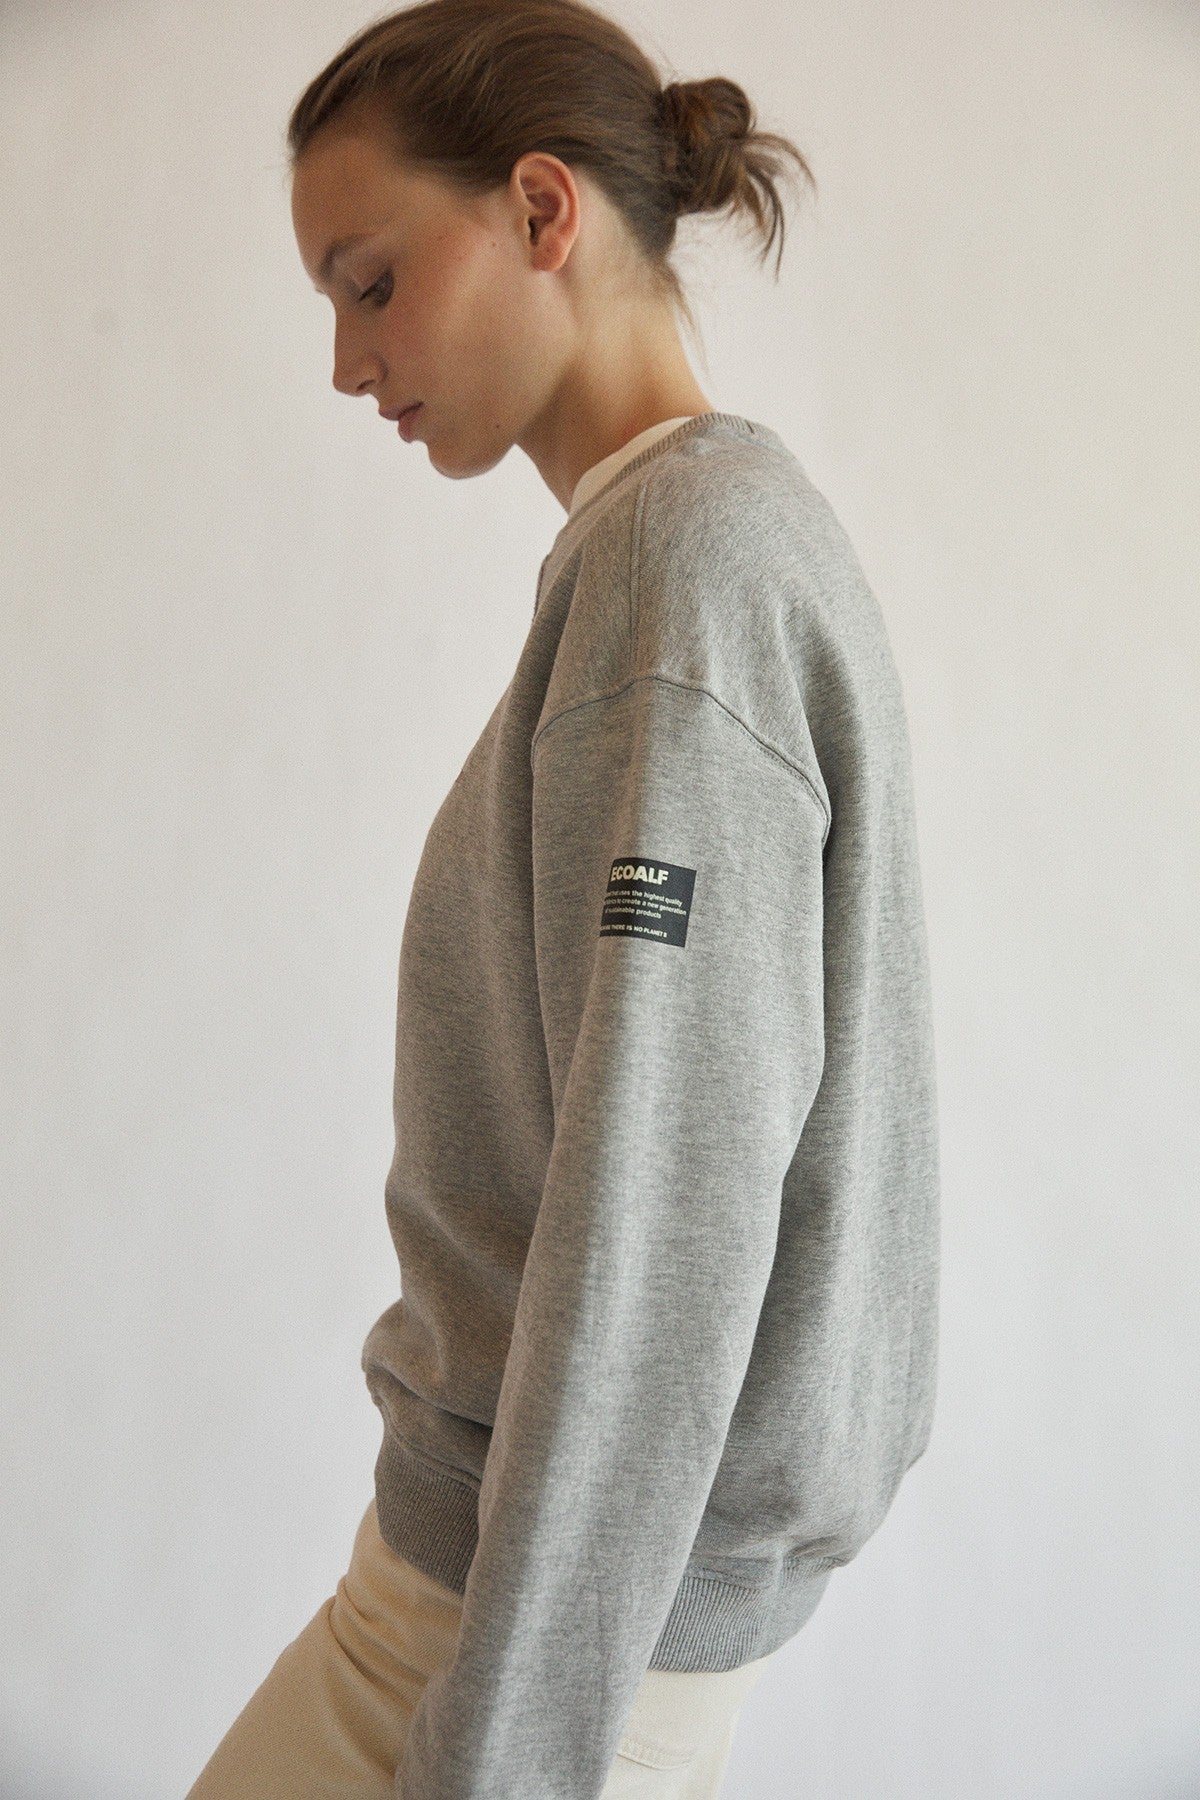 Llanesalf Because Woman Sweatshirt - Grey Melange